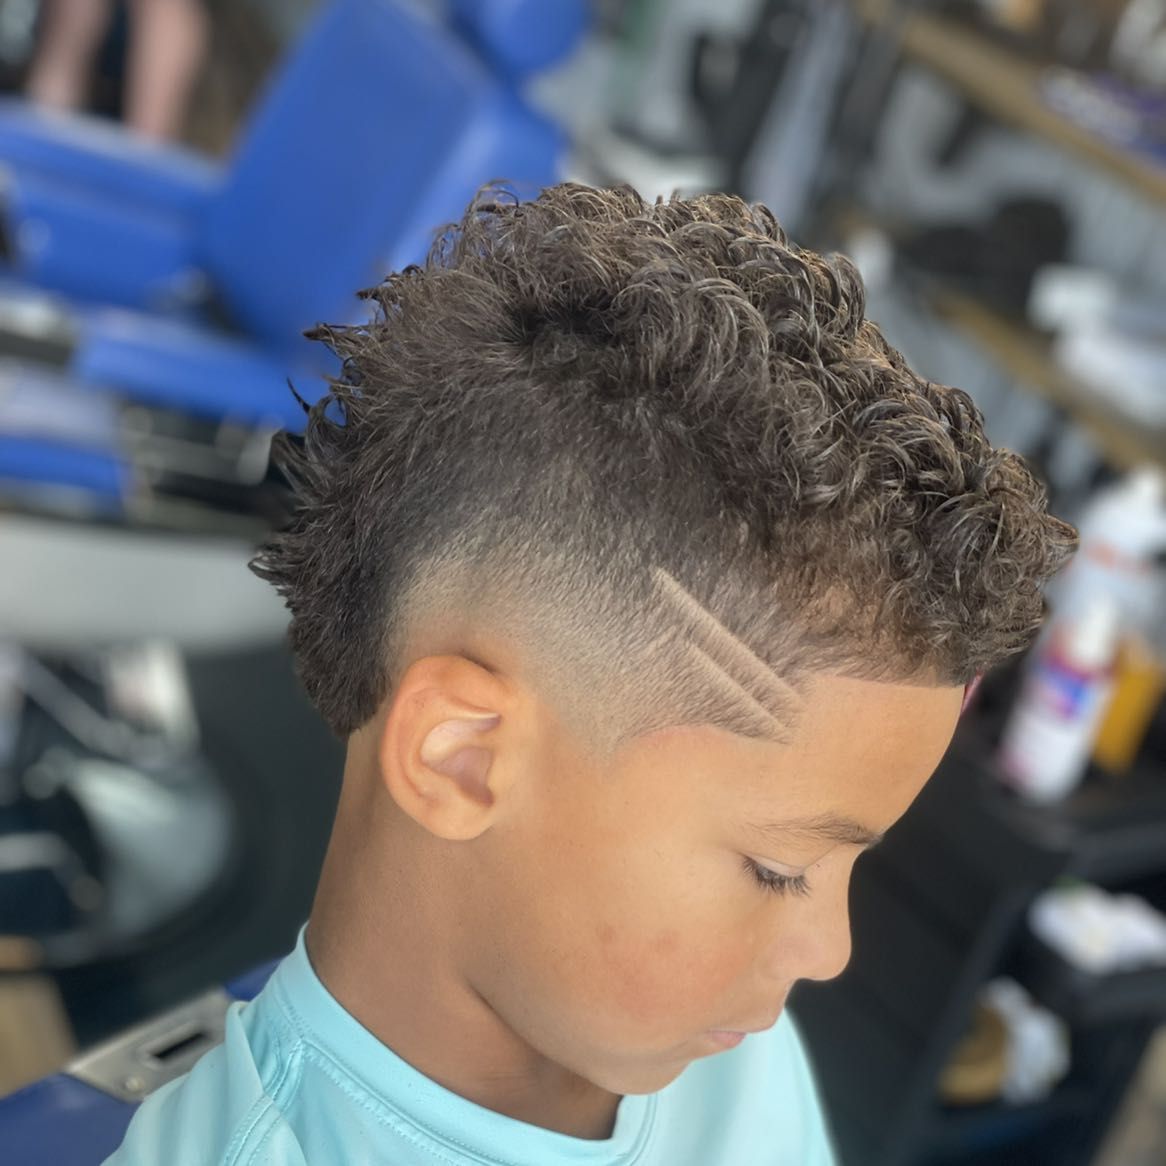 "kids haircut" ages 1-12 portfolio